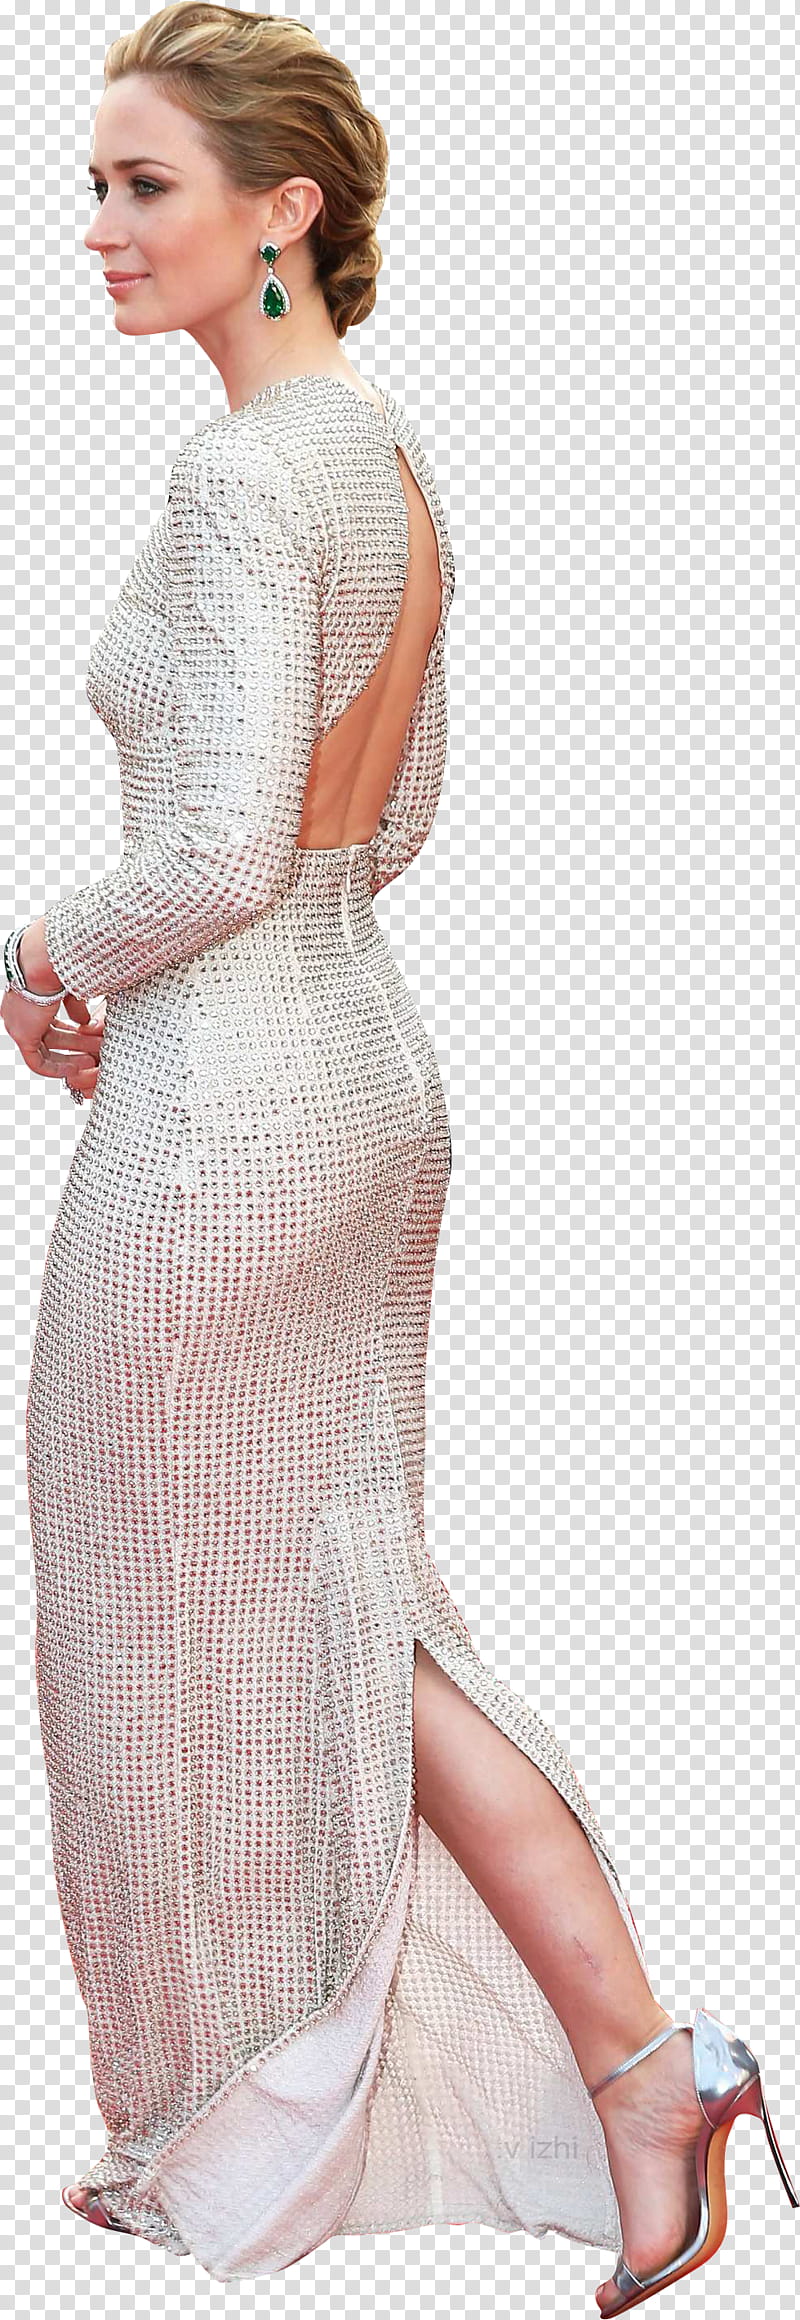 Emily Blunt,  transparent background PNG clipart